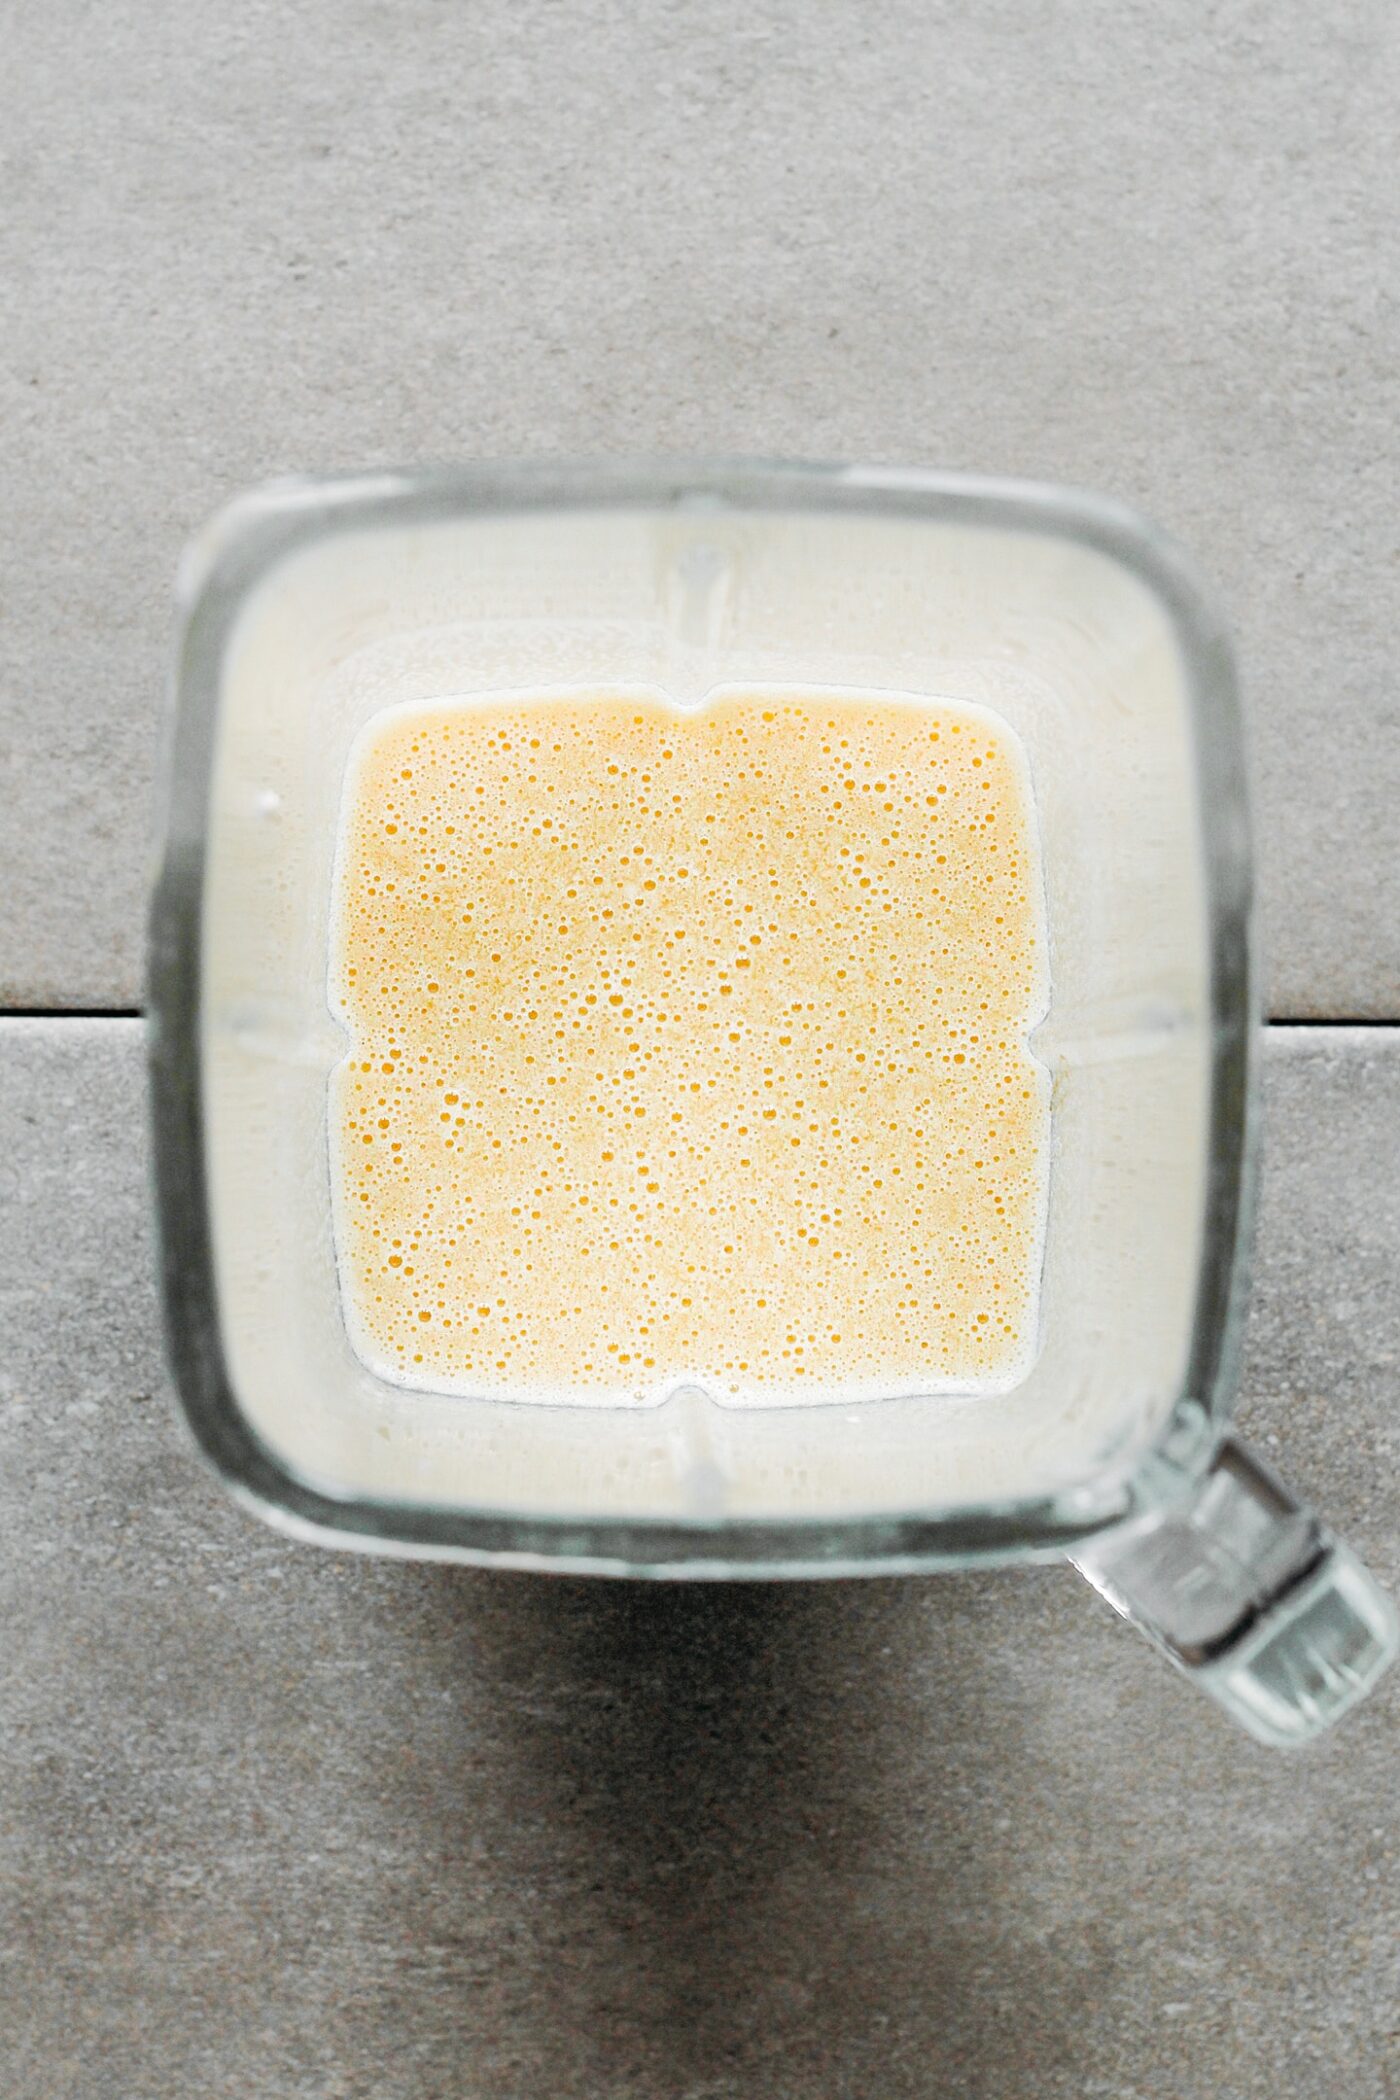 Vegan butter in a blender.